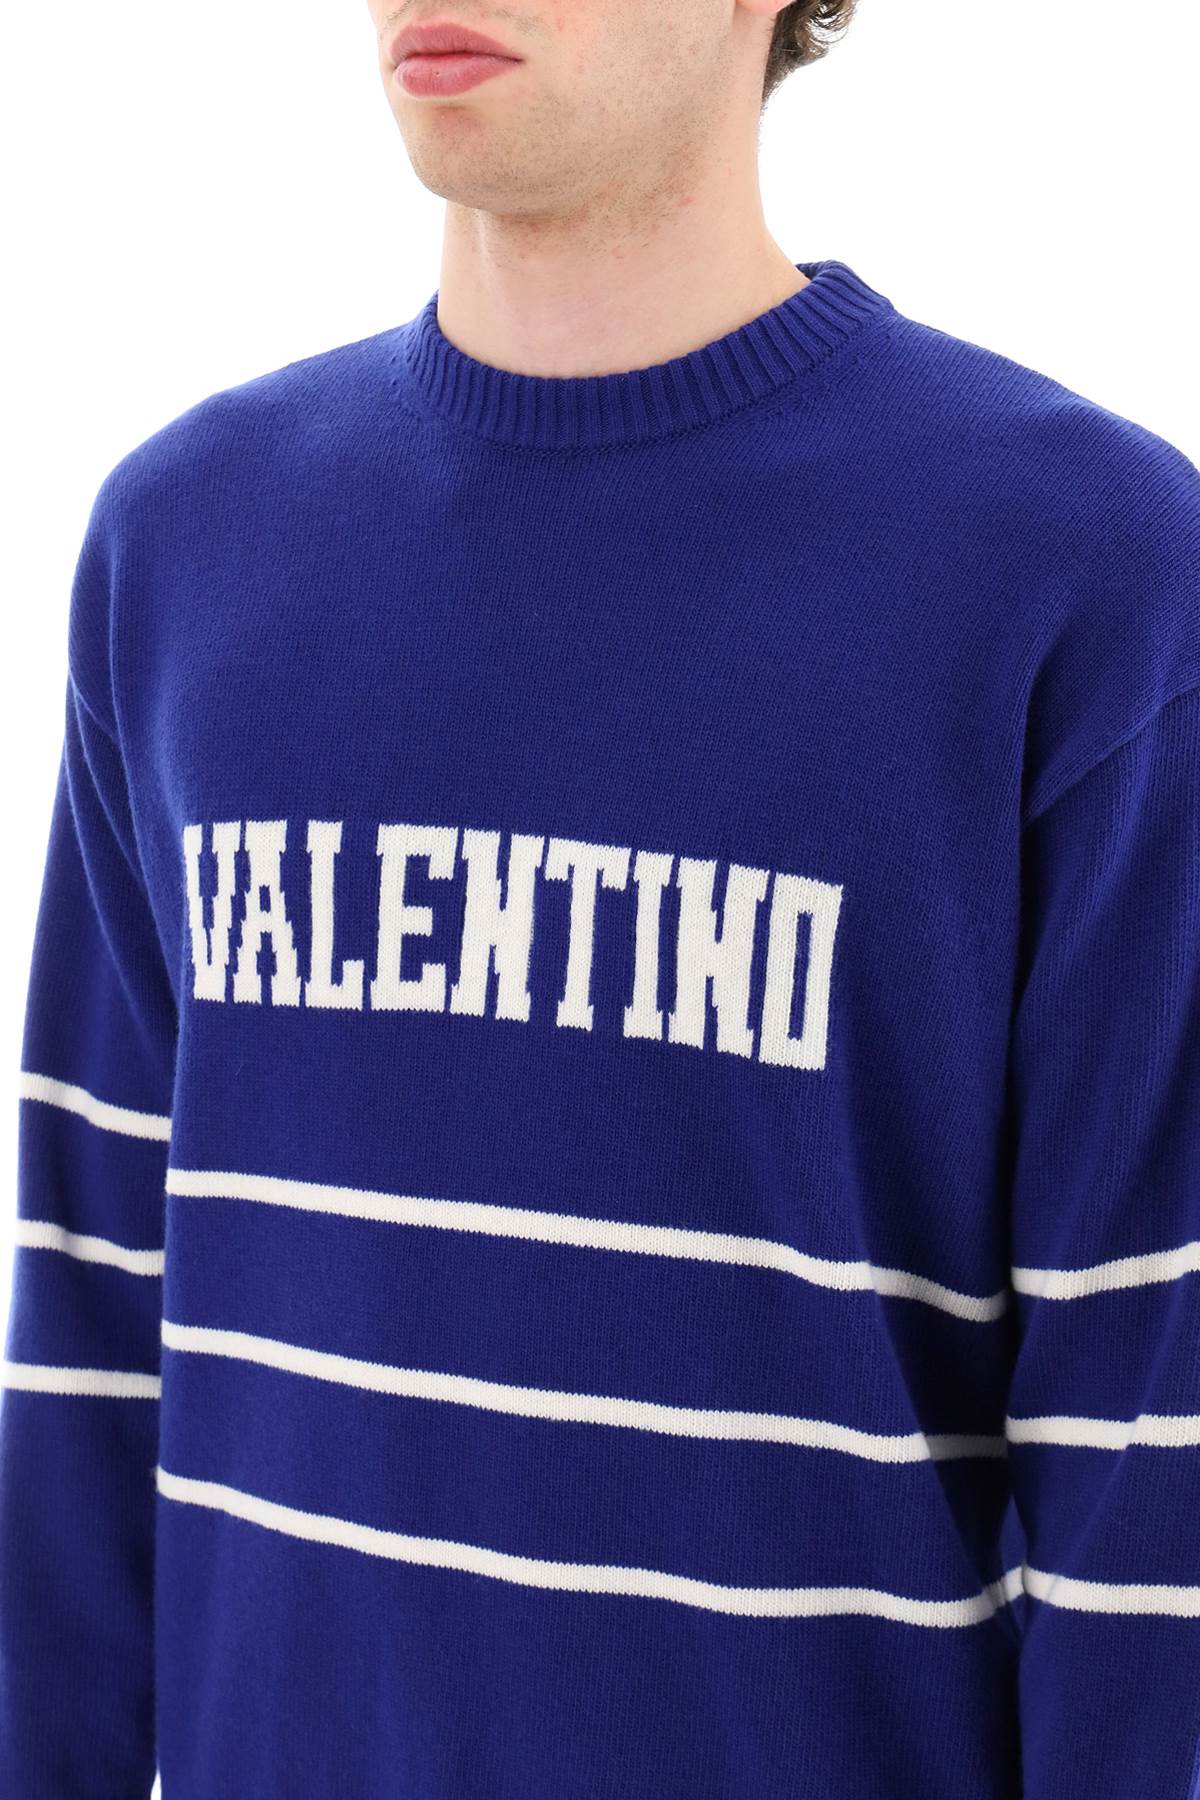 Valentino Valentino pullover with jacquard lettering logo